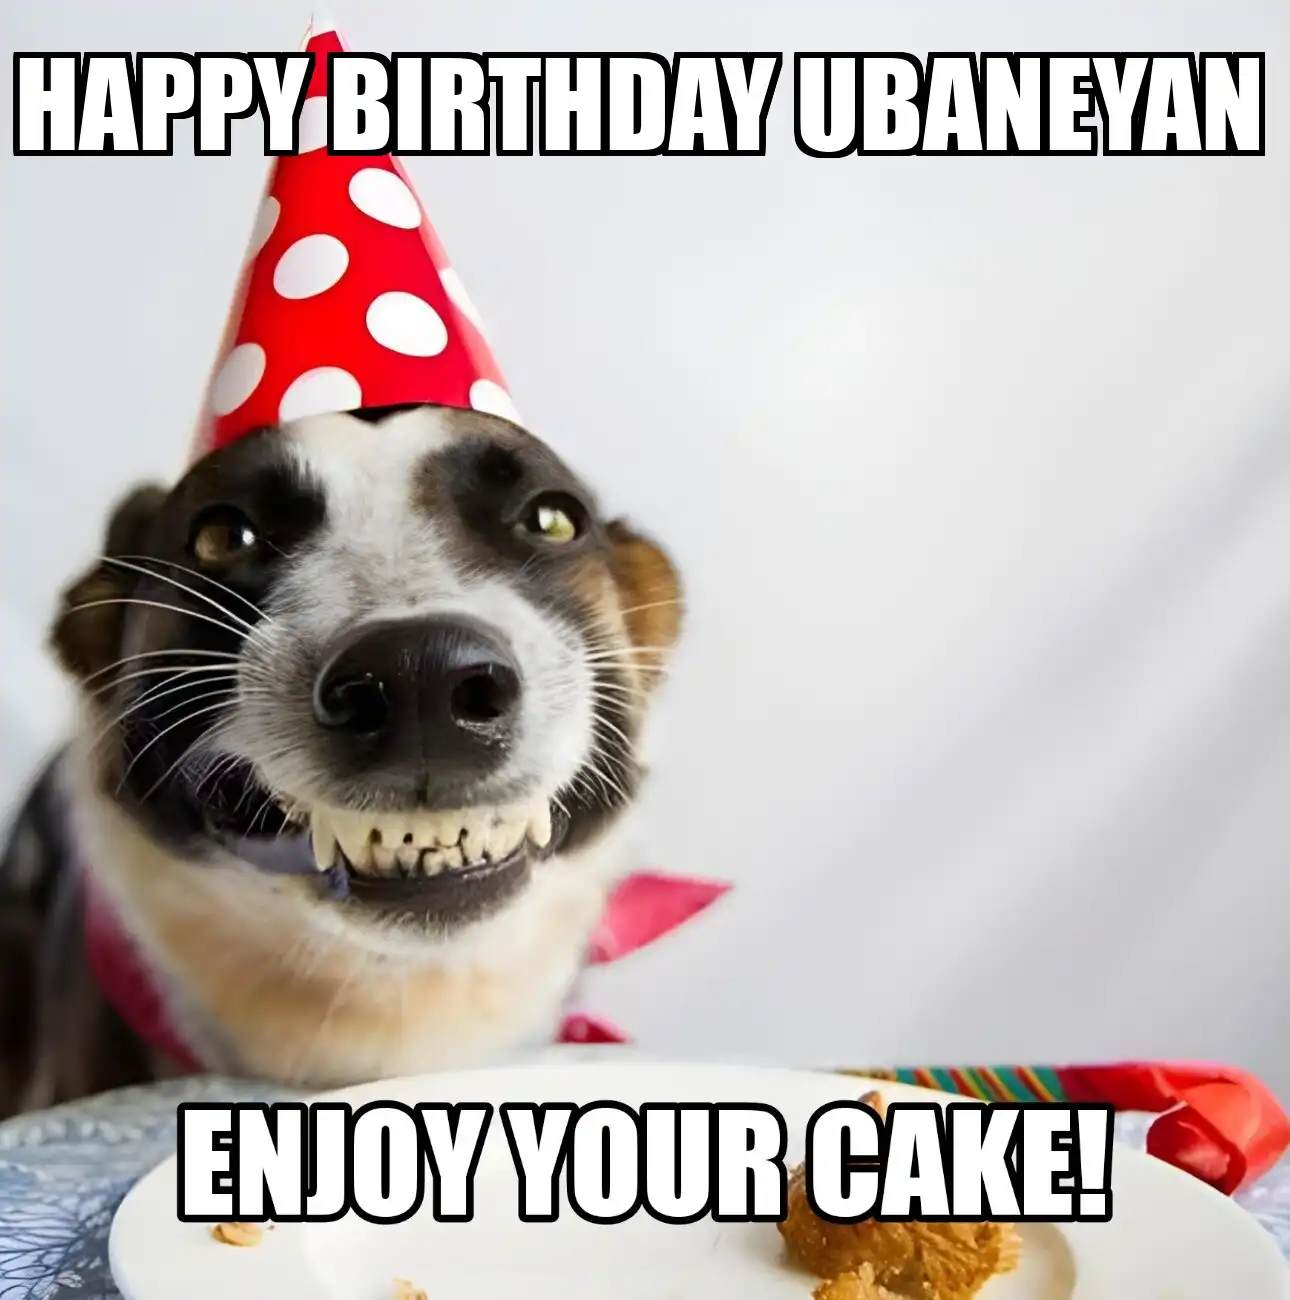 Happy Birthday Ubaneyan Enjoy Your Cake Dog Meme